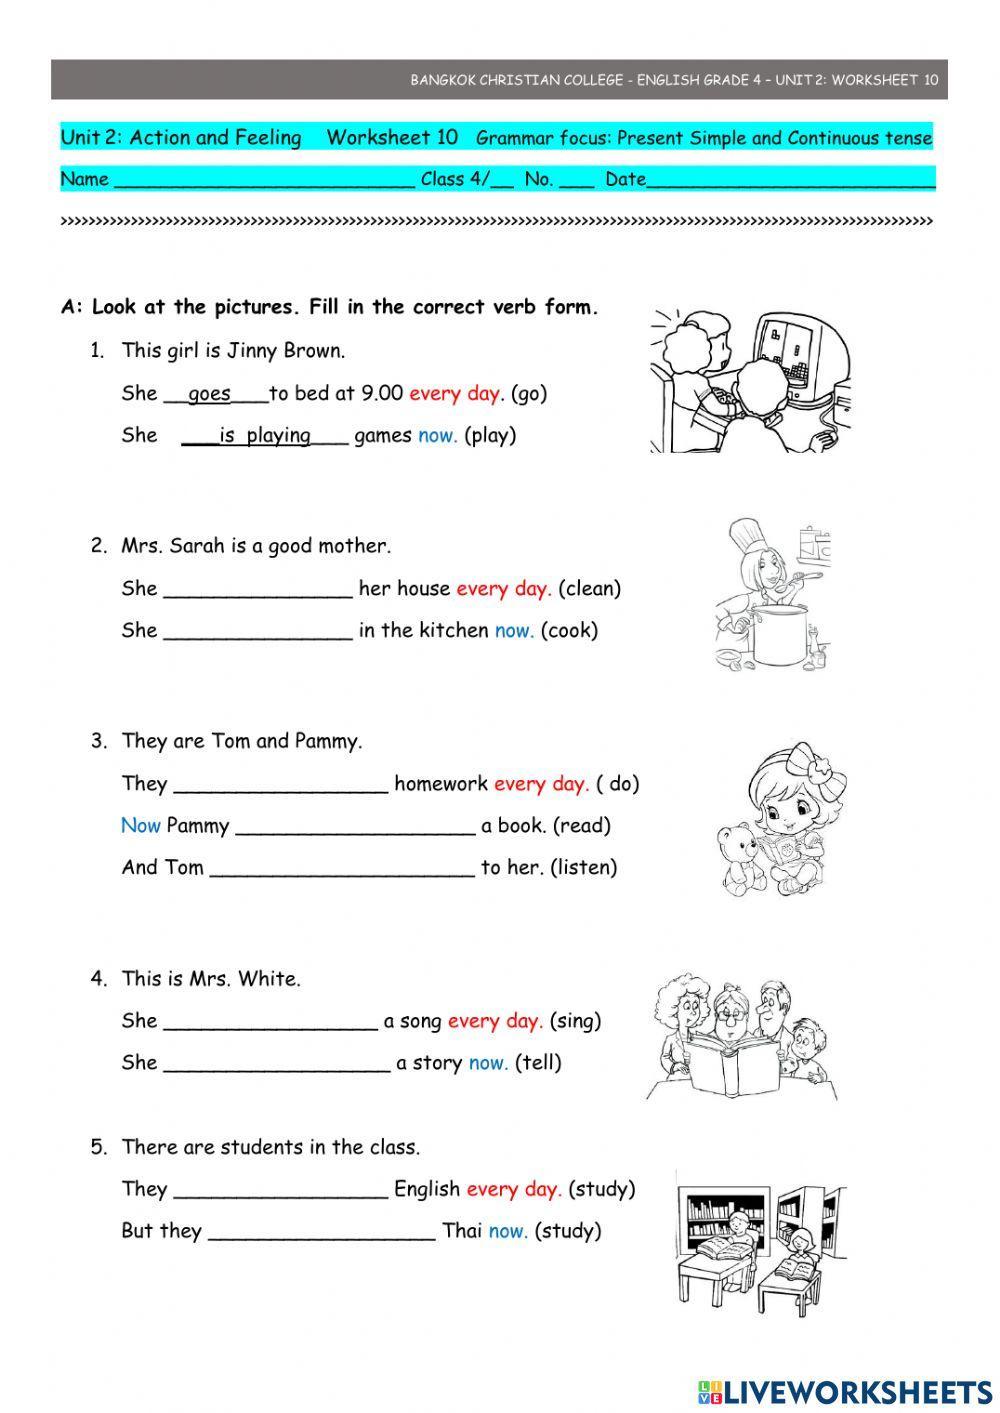 Unit 2 worksheet 10